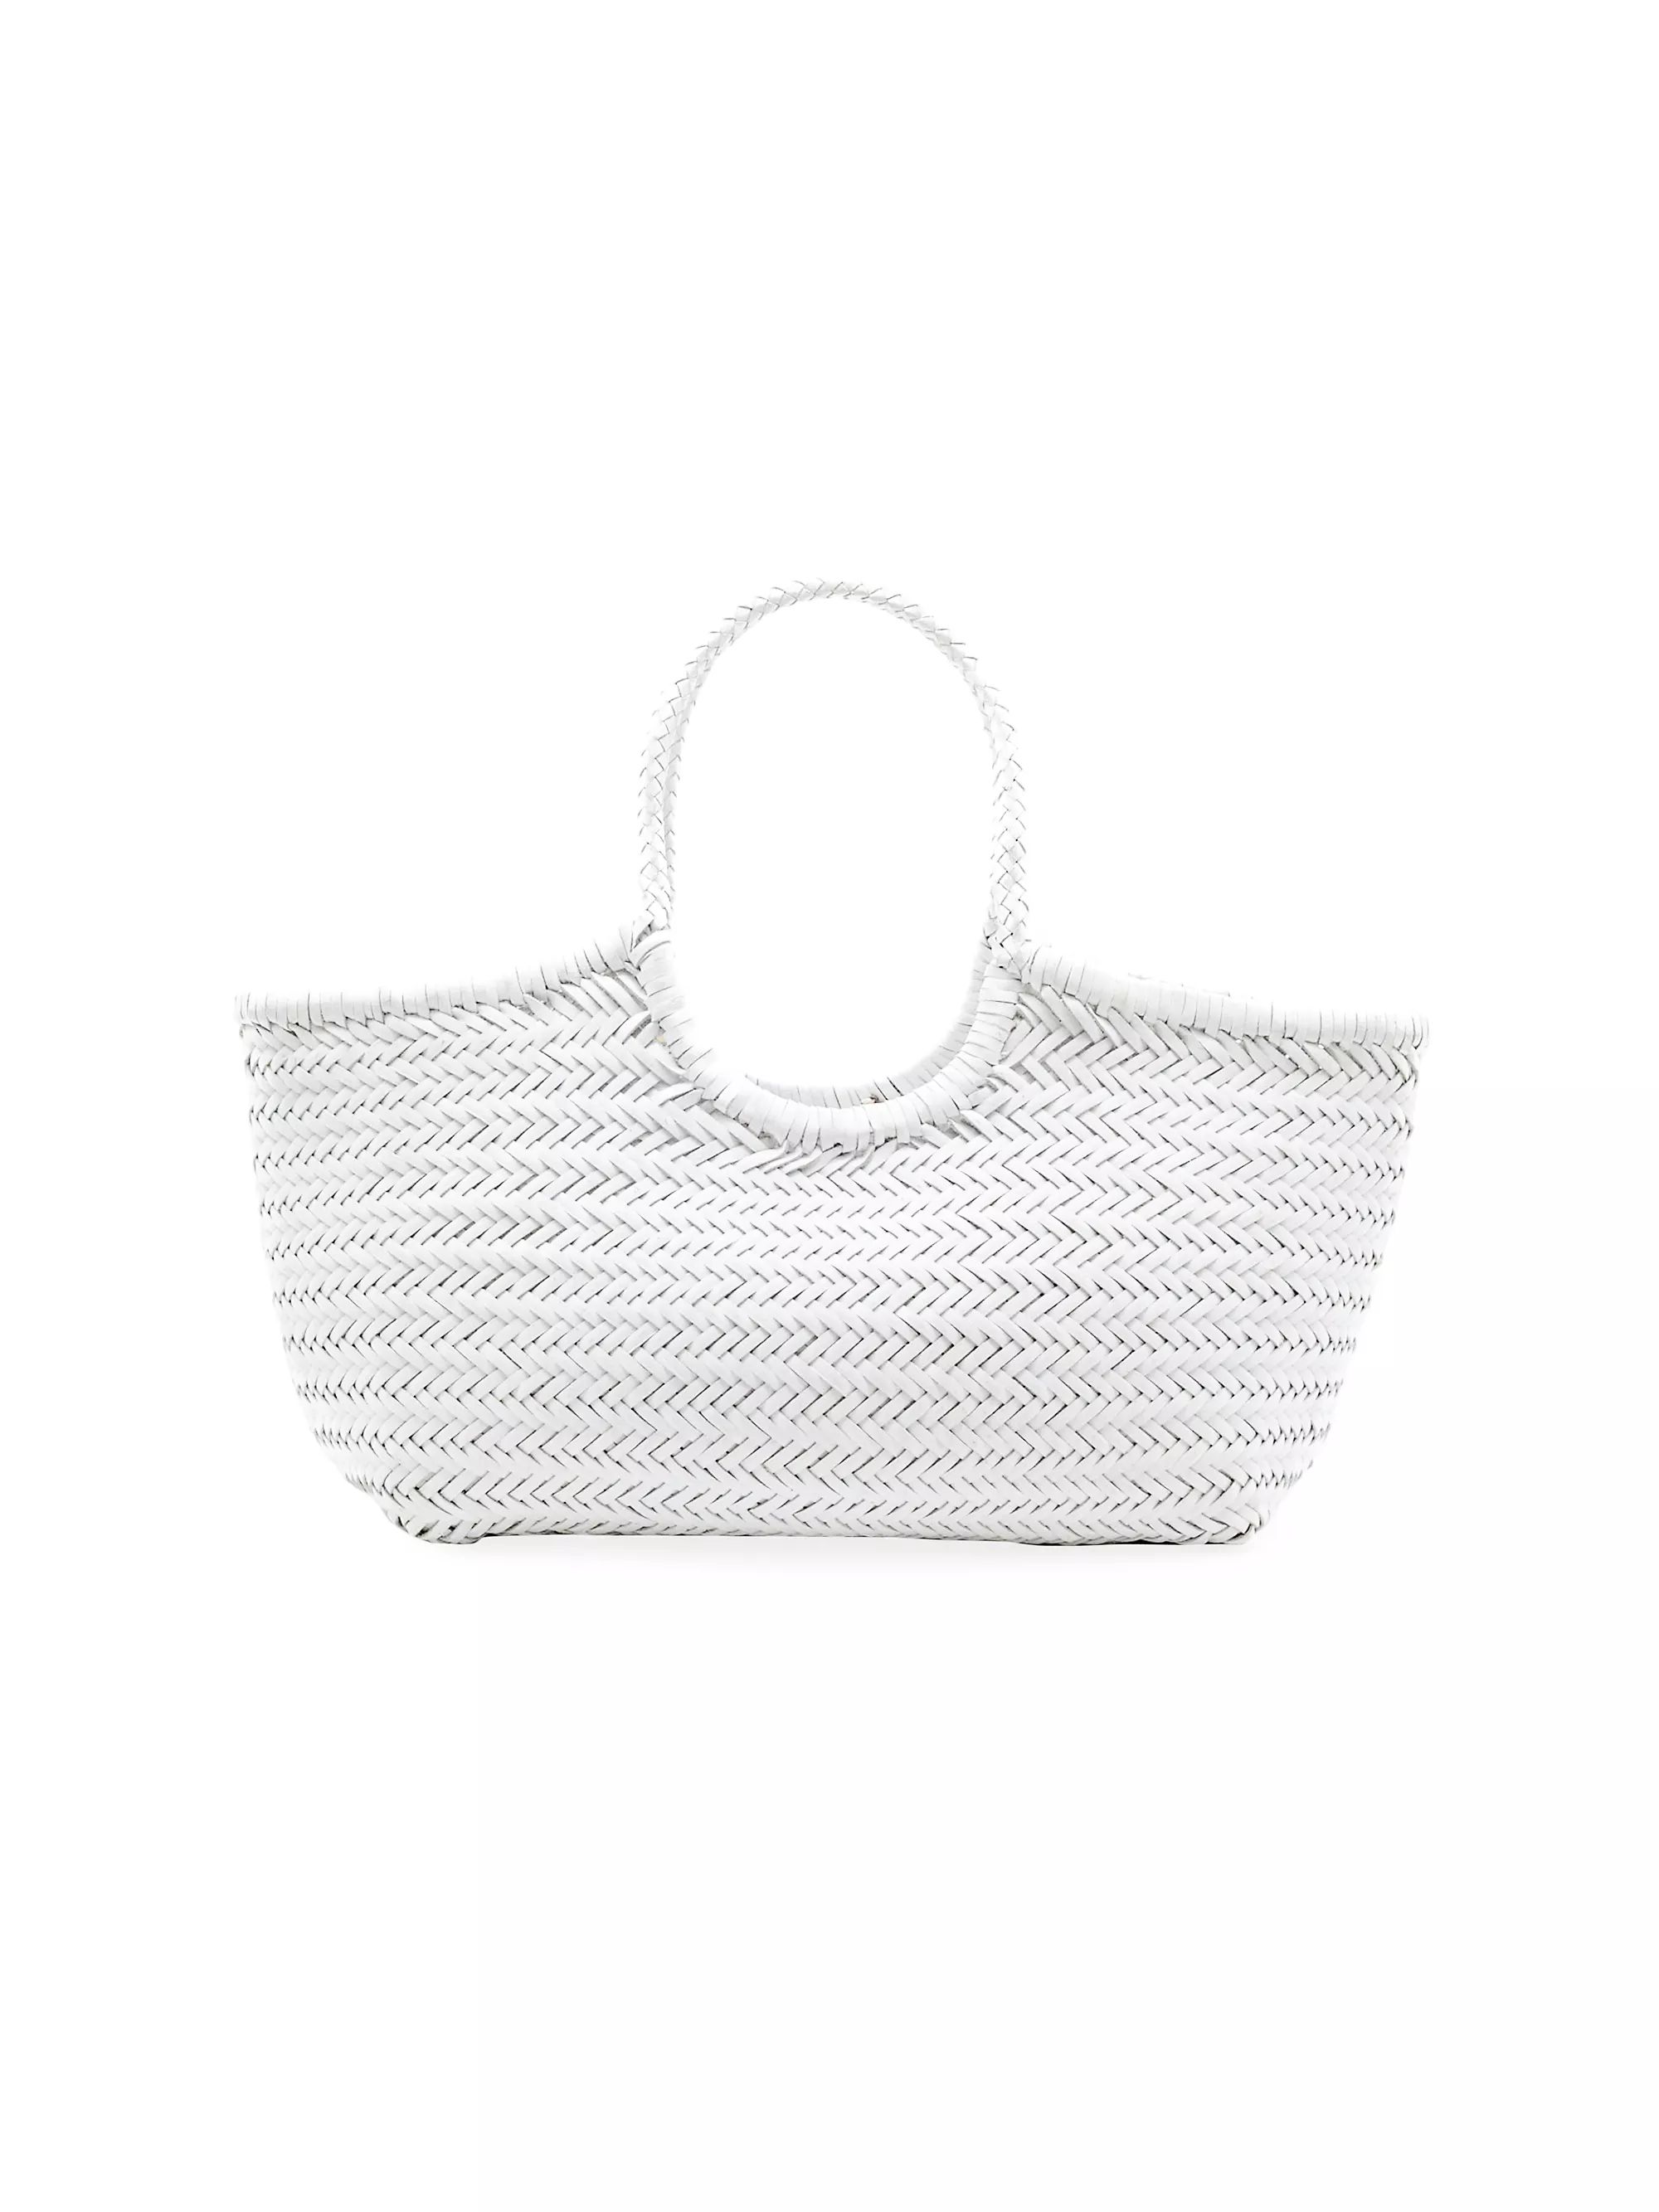 Nantucket Woven Leather Basket Bag | Saks Fifth Avenue